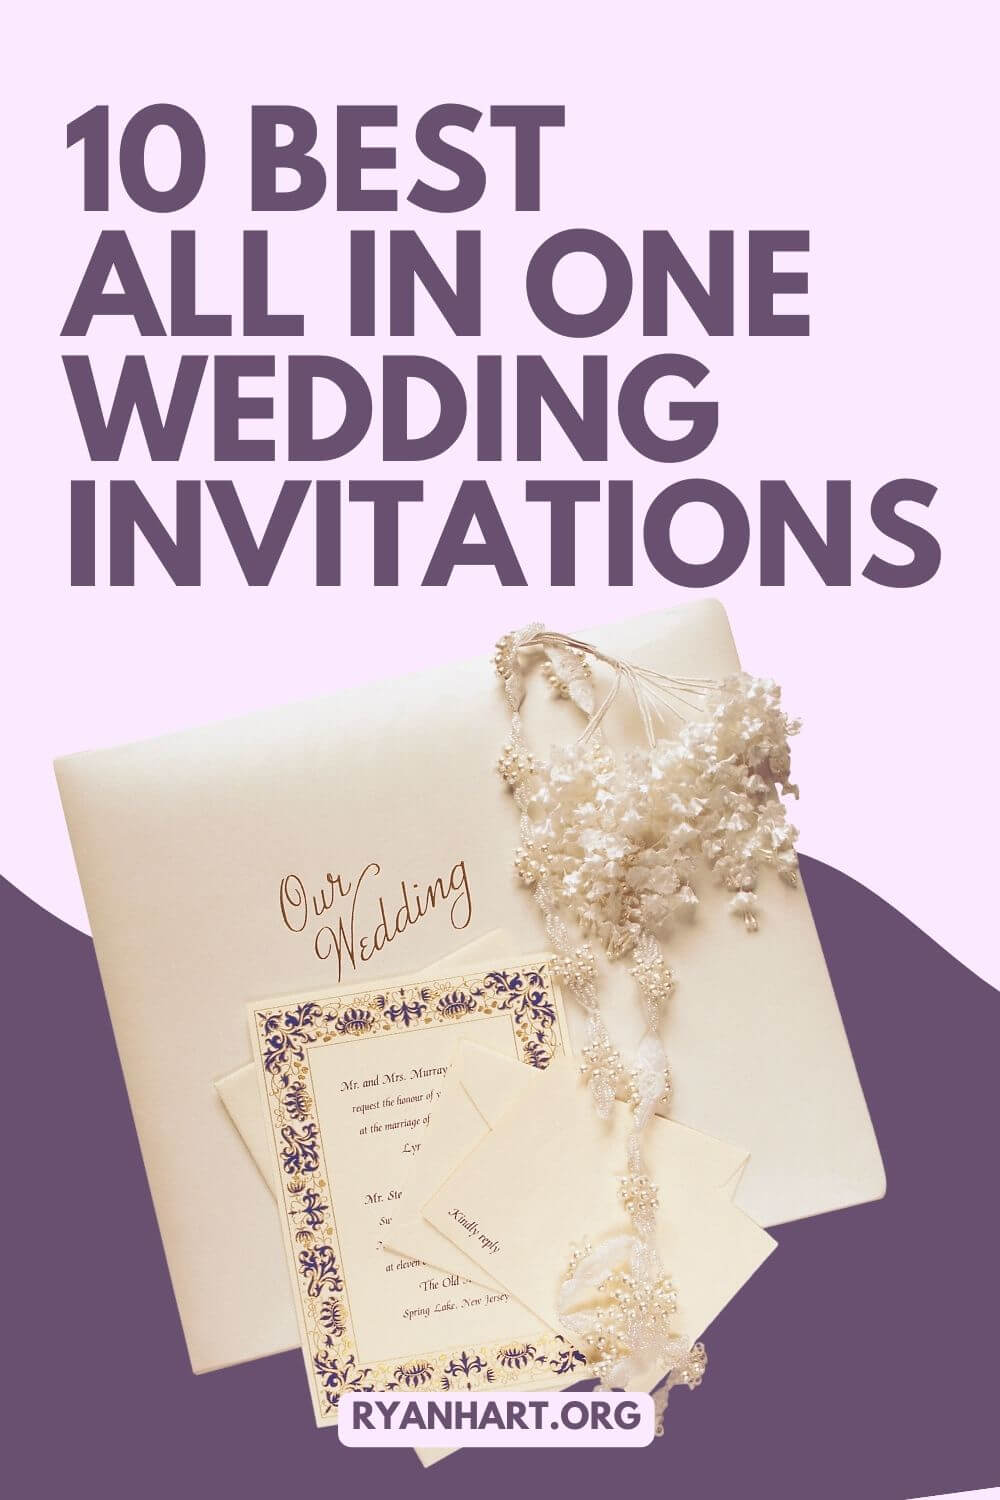 Invitation to a wedding